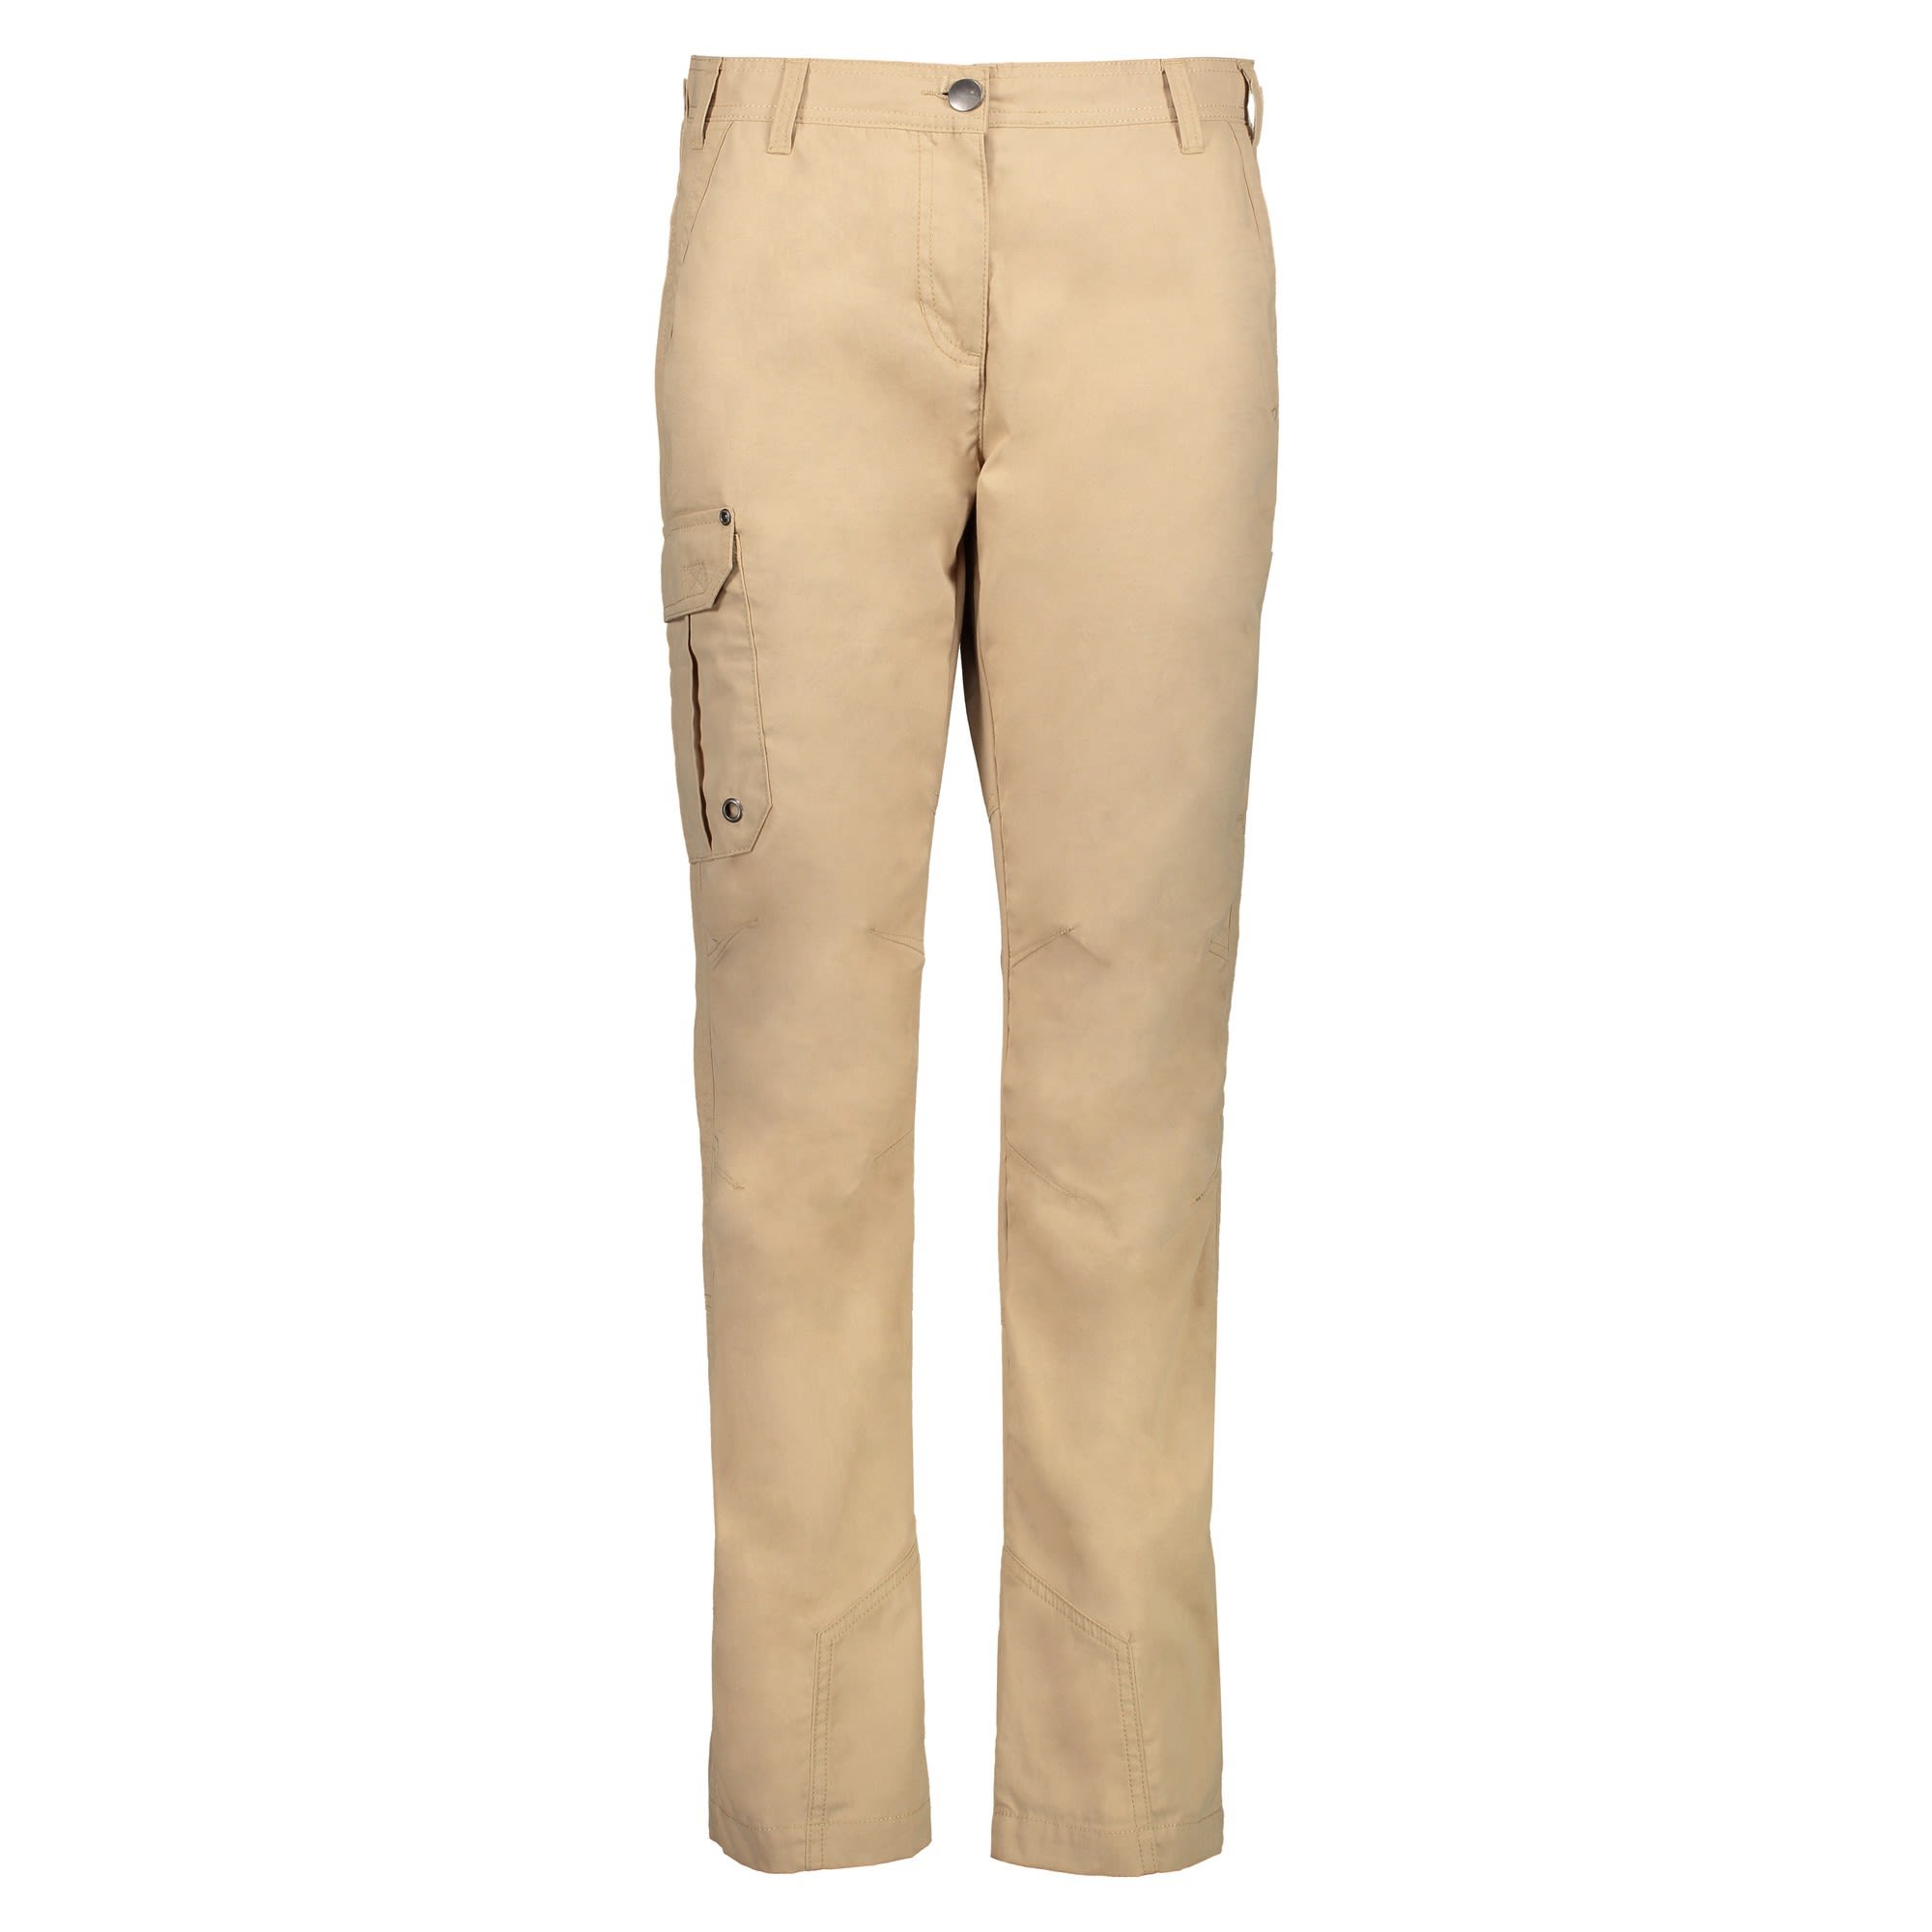 CMP Long Pant Cotton Nylon Braun- Female Softshellhosen- Grsse 42 - Farbe Tortora unter CMP